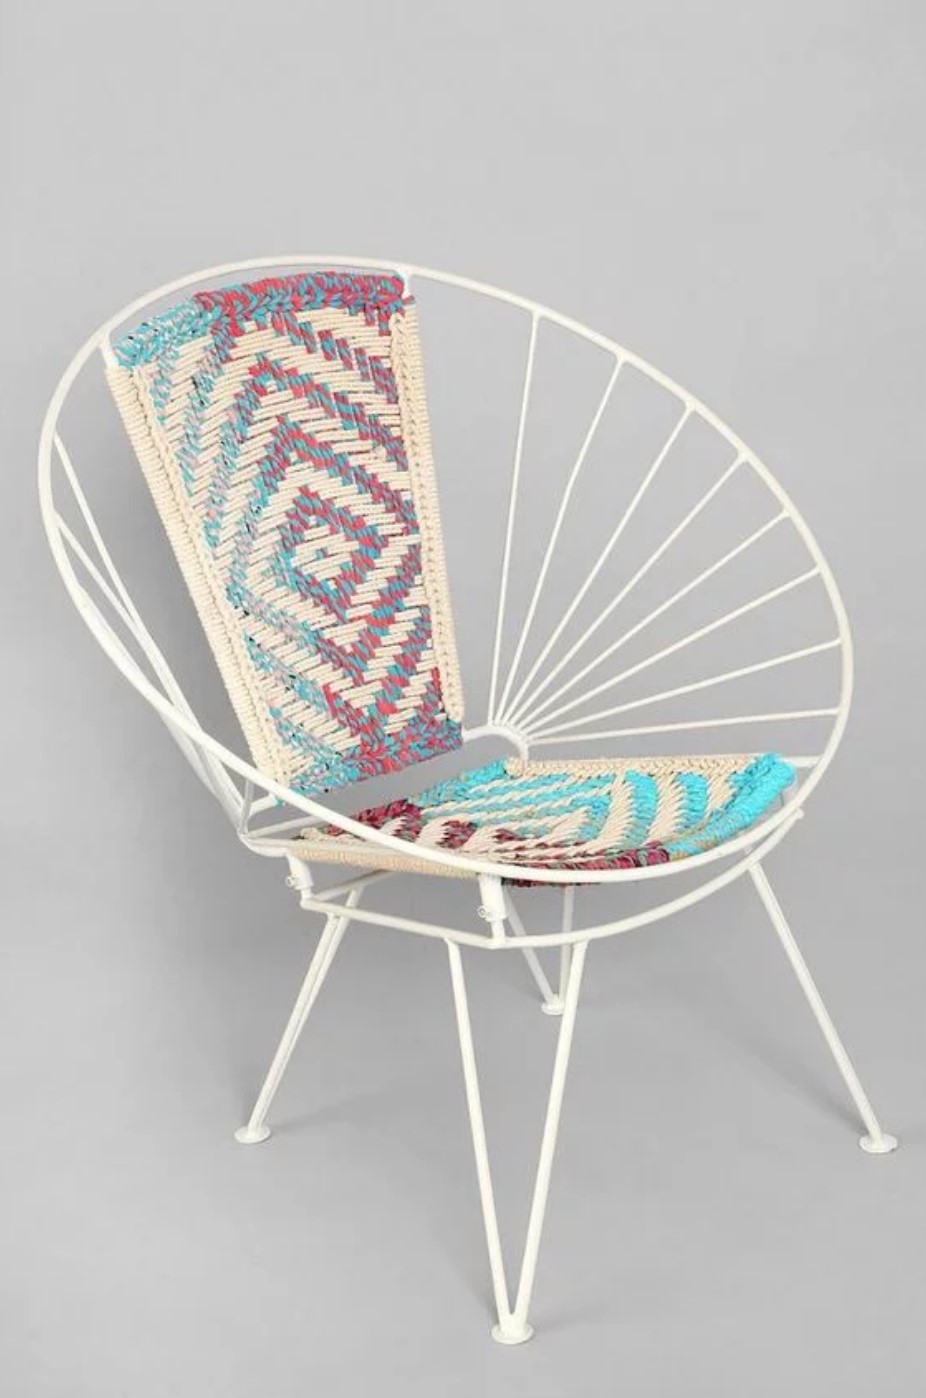 Acapulco woven chair